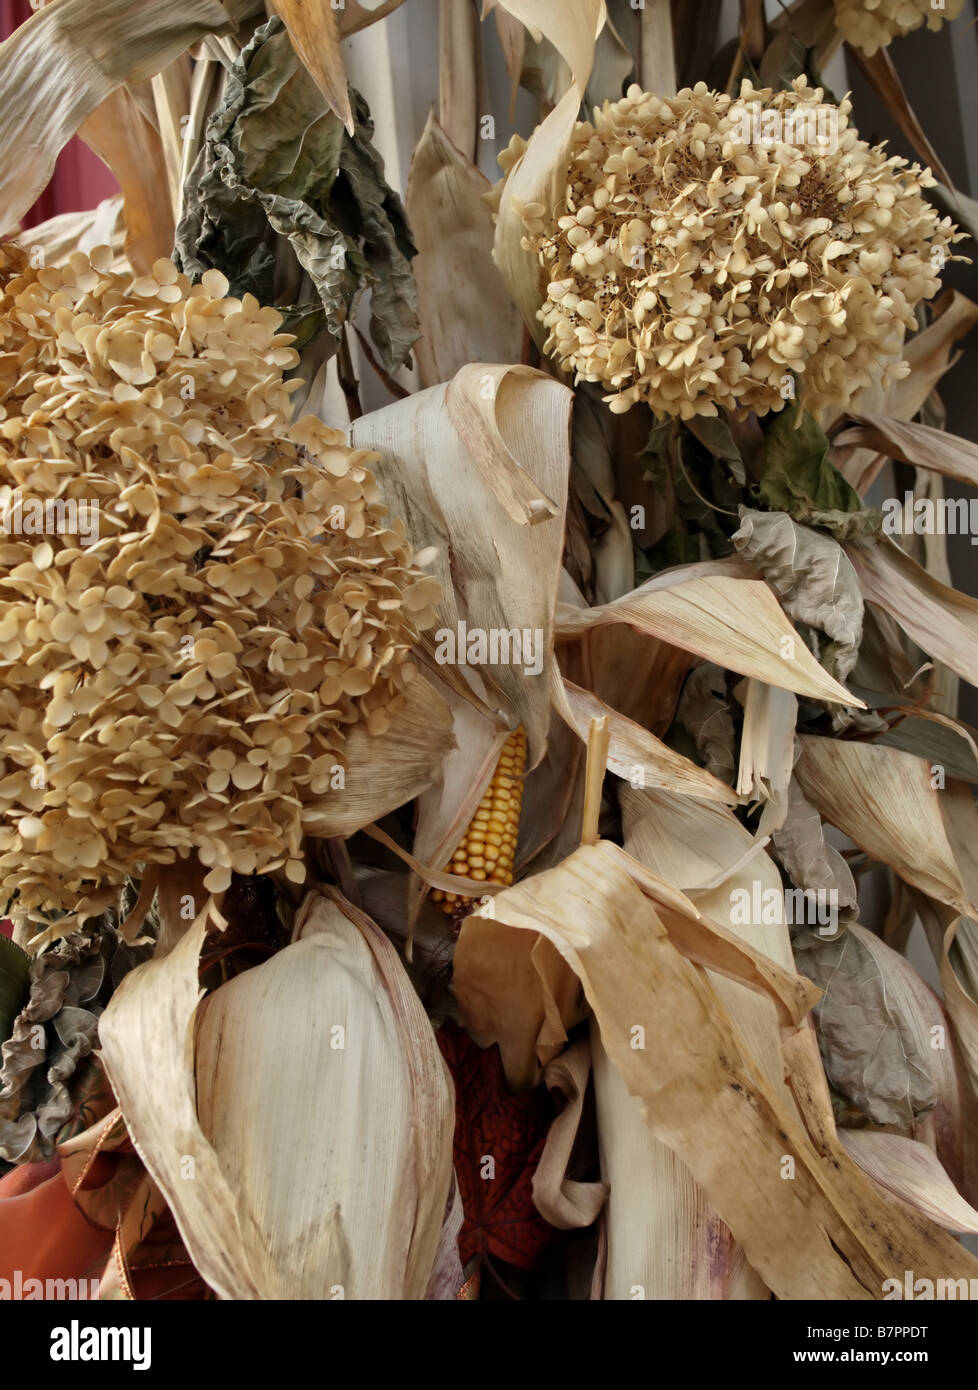 Fall Arrangement Of Dried Hydrangea Flowers And Dried Corn Stalks Stock Photo Alamy